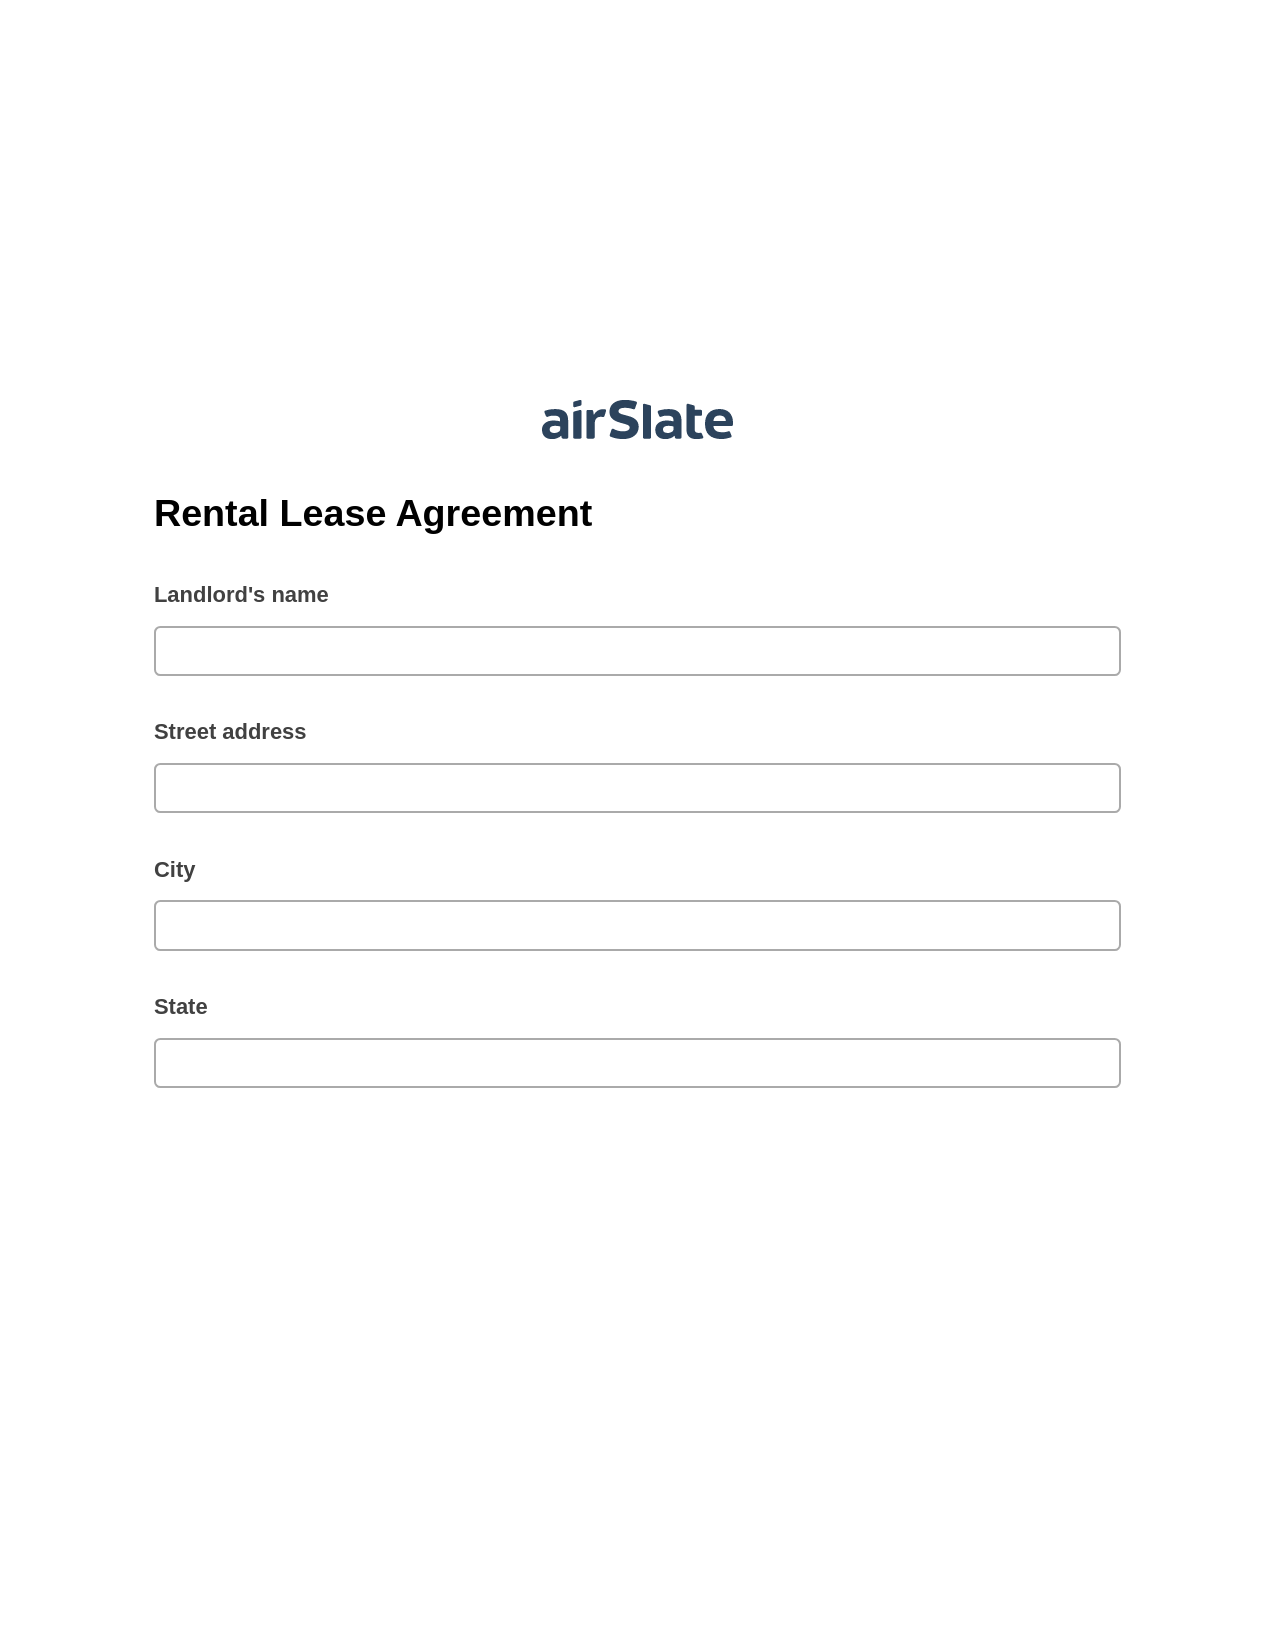 Rental Lease Agreement Pre-fill from CSV File Bot, Jira Bot, Slack Notification Postfinish Bot